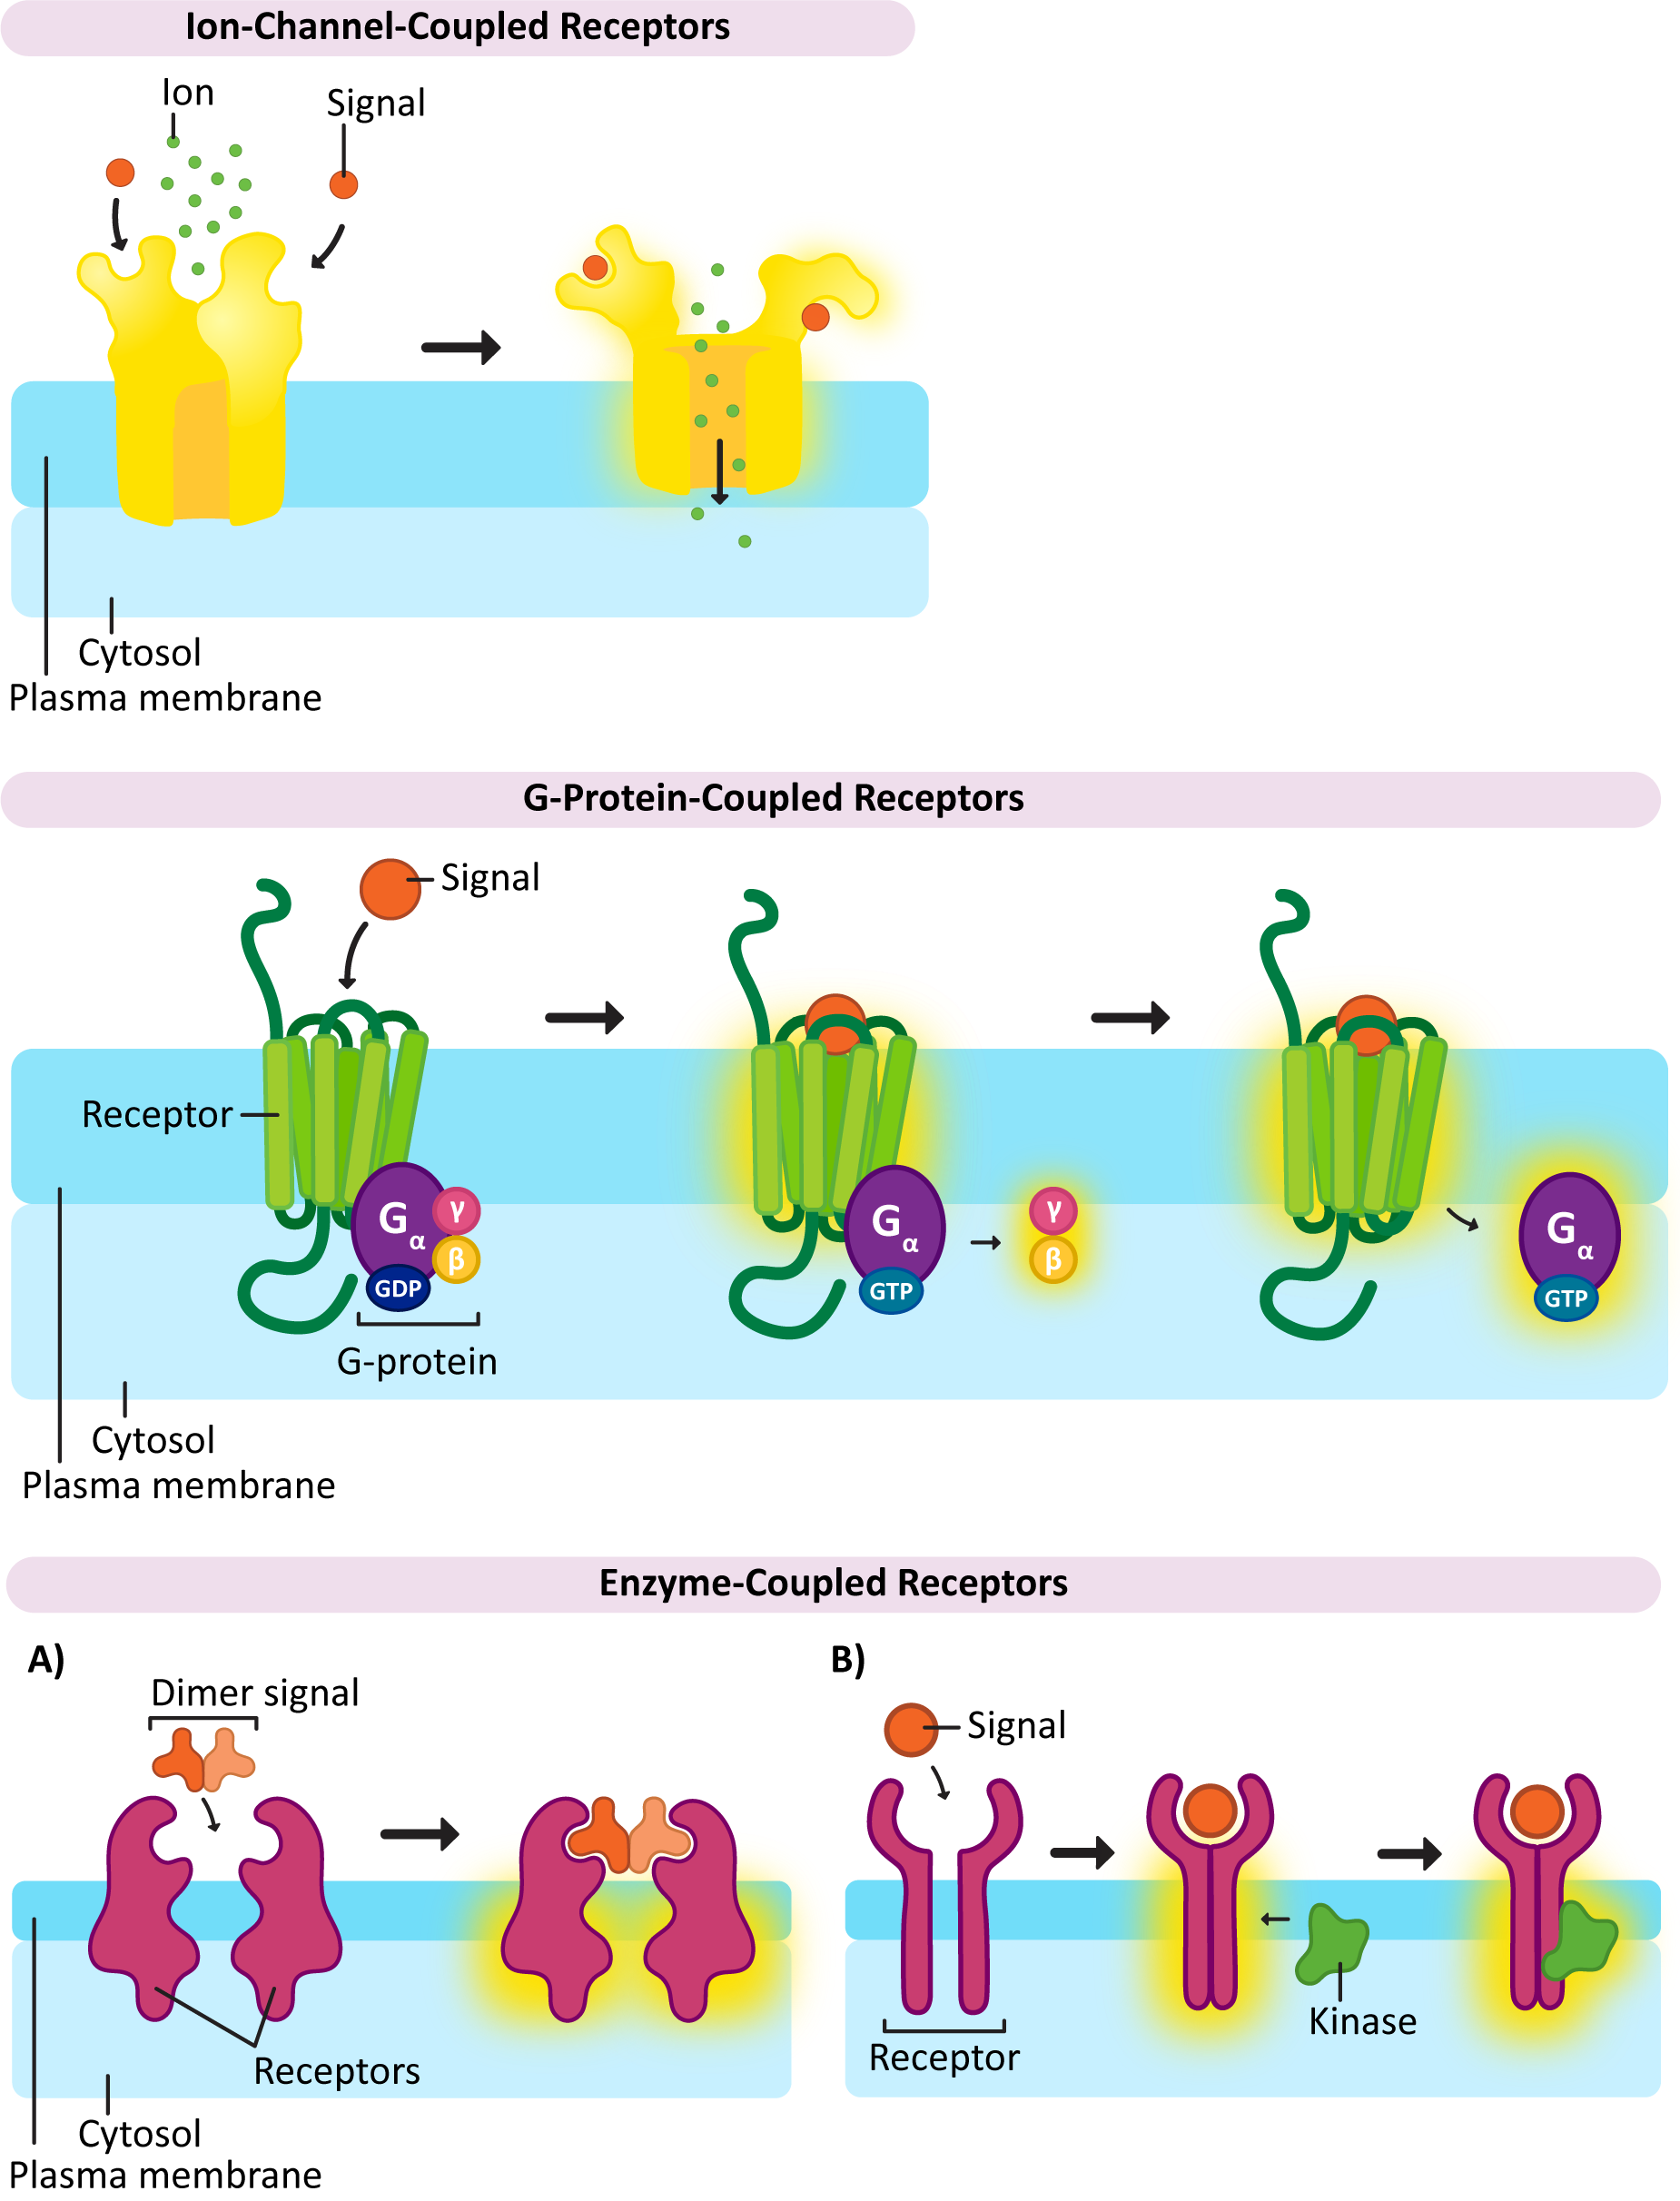 Examples of common signaling receptors